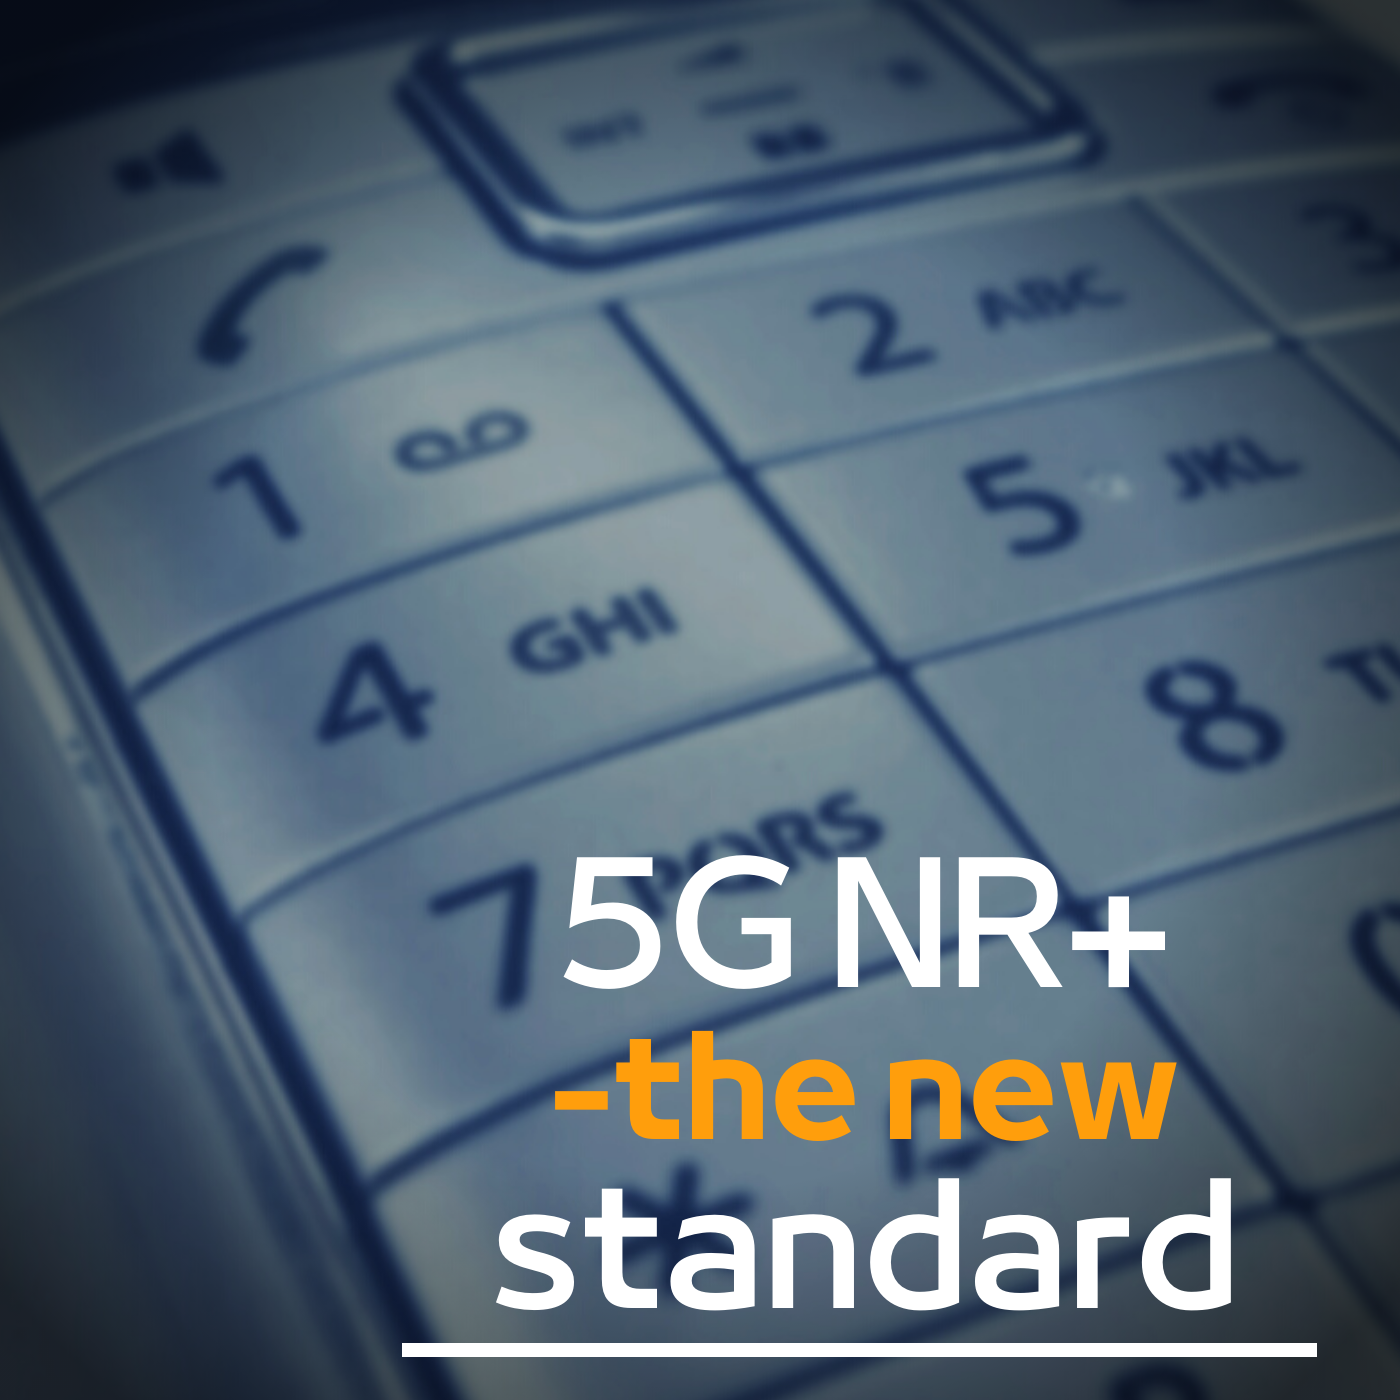 5g nr+ the new 5G standard